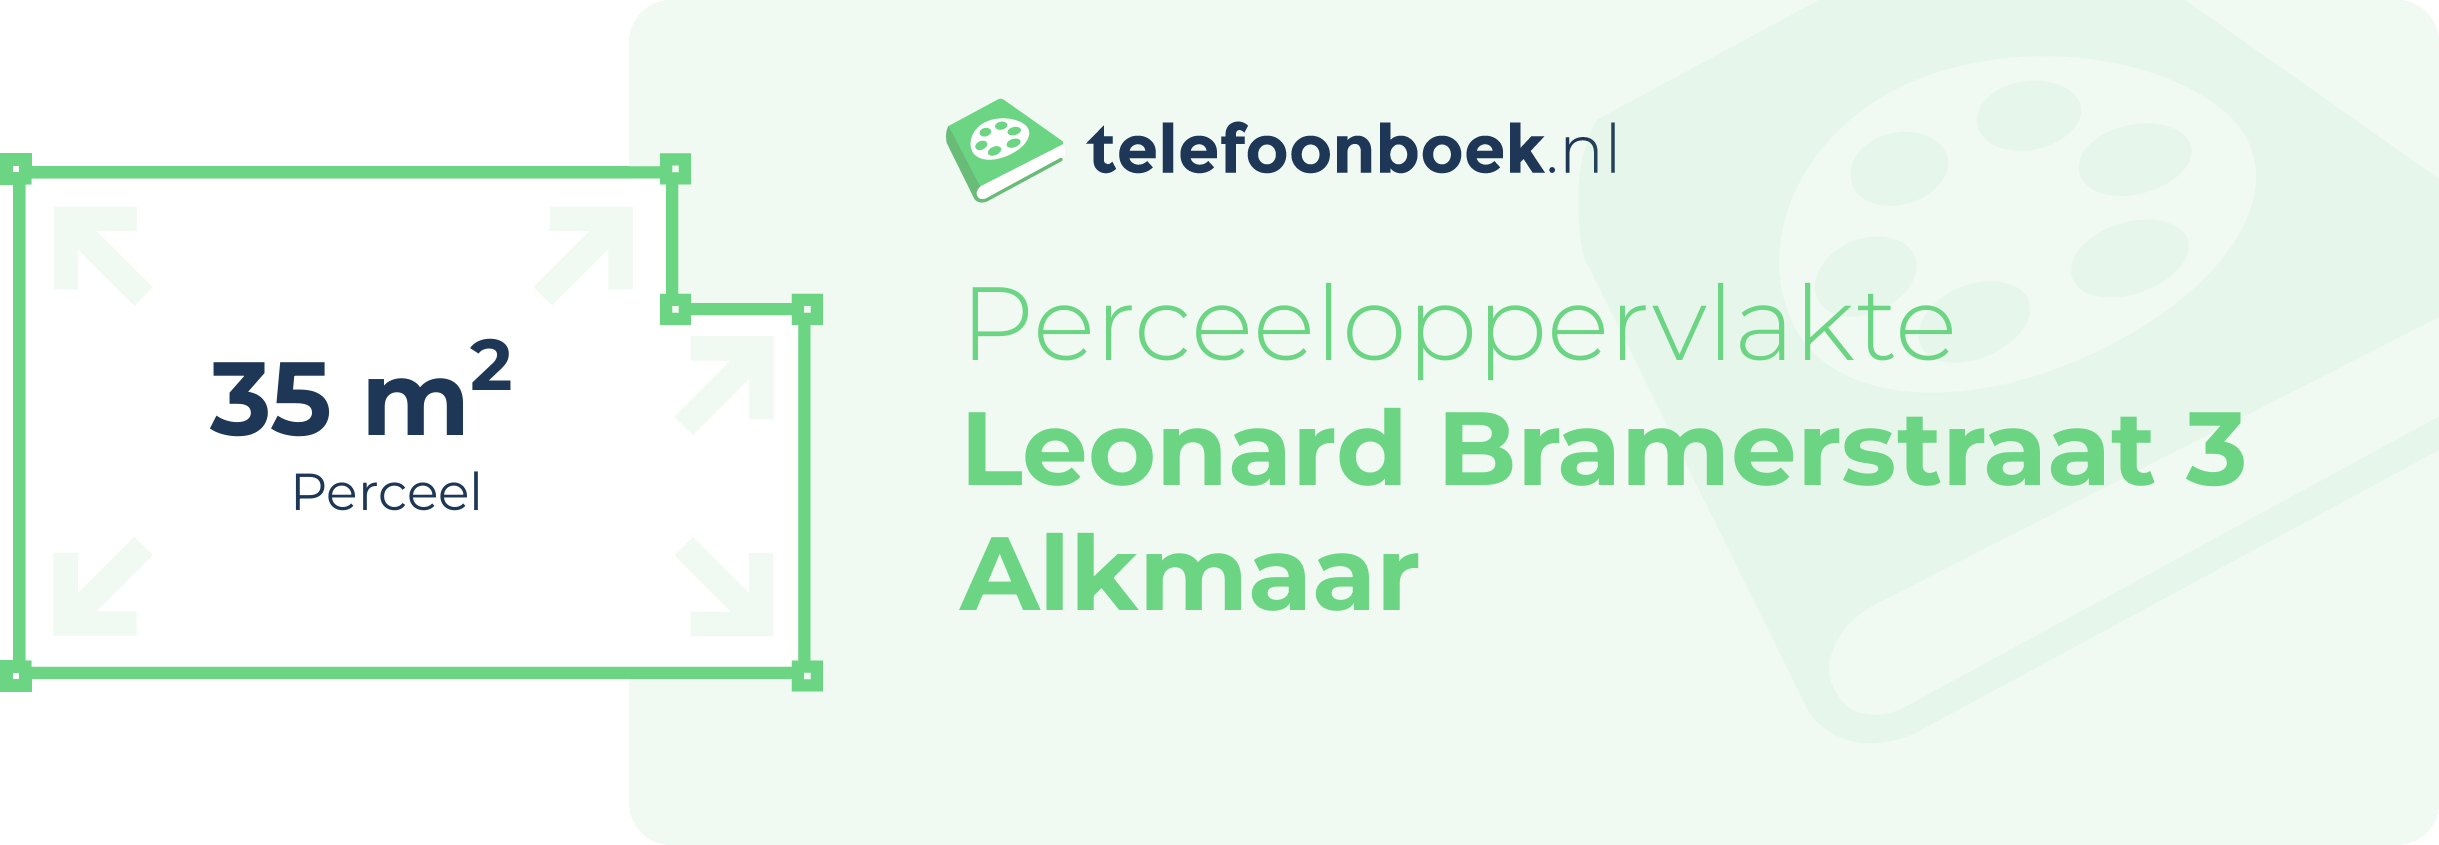 Perceeloppervlakte Leonard Bramerstraat 3 Alkmaar